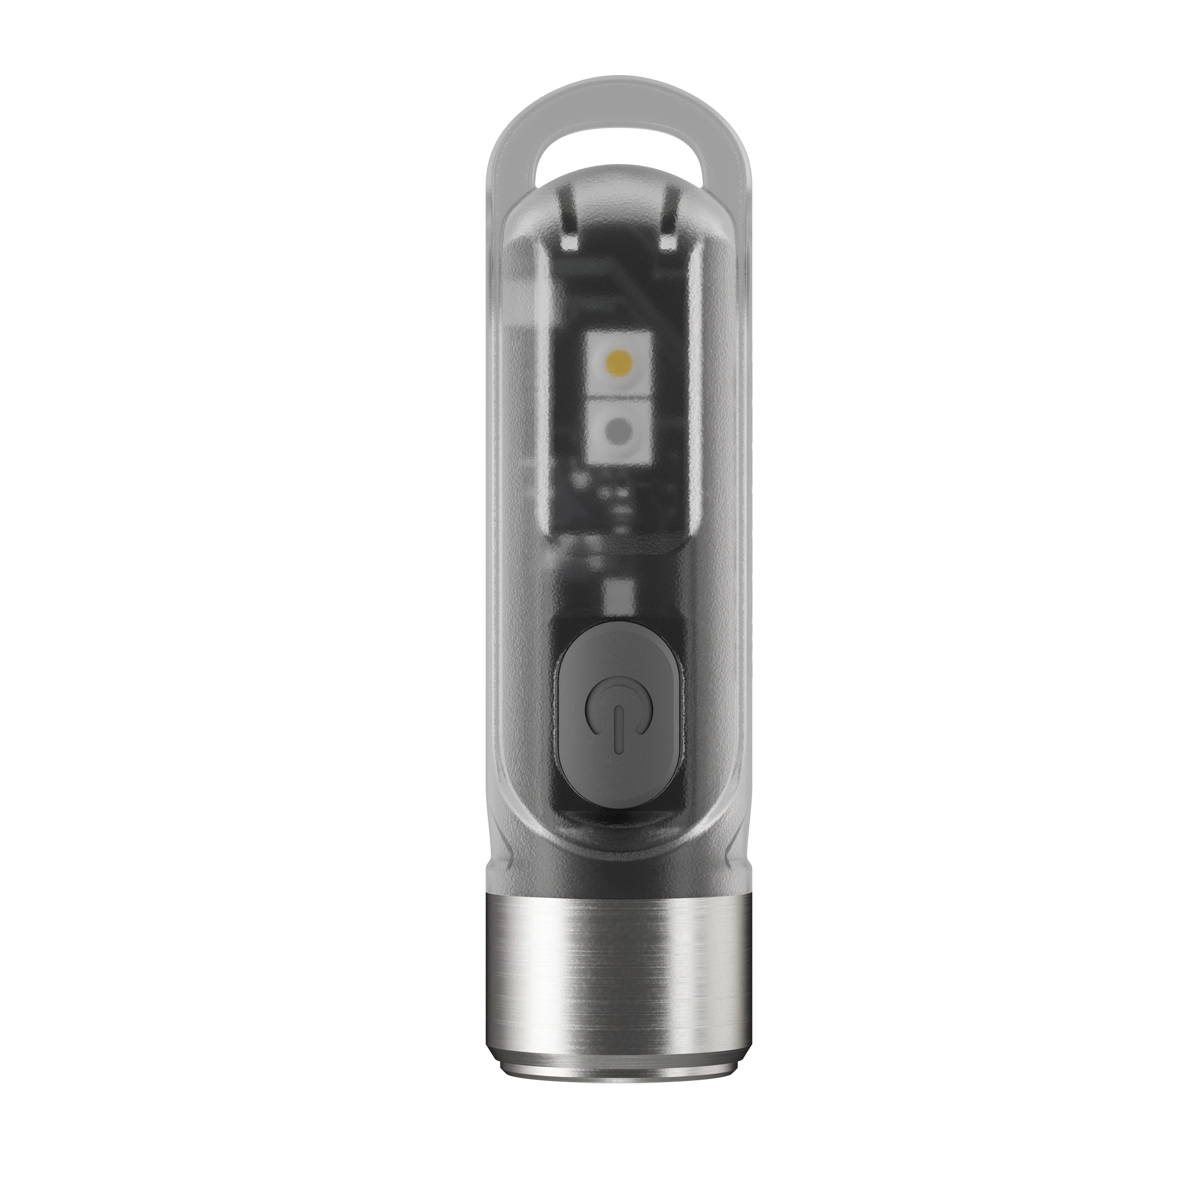 Nitecore TIKI GITD UV/HiCRI LED Keychain Light 300 Lumens Type-C Rechargeable Flashlight